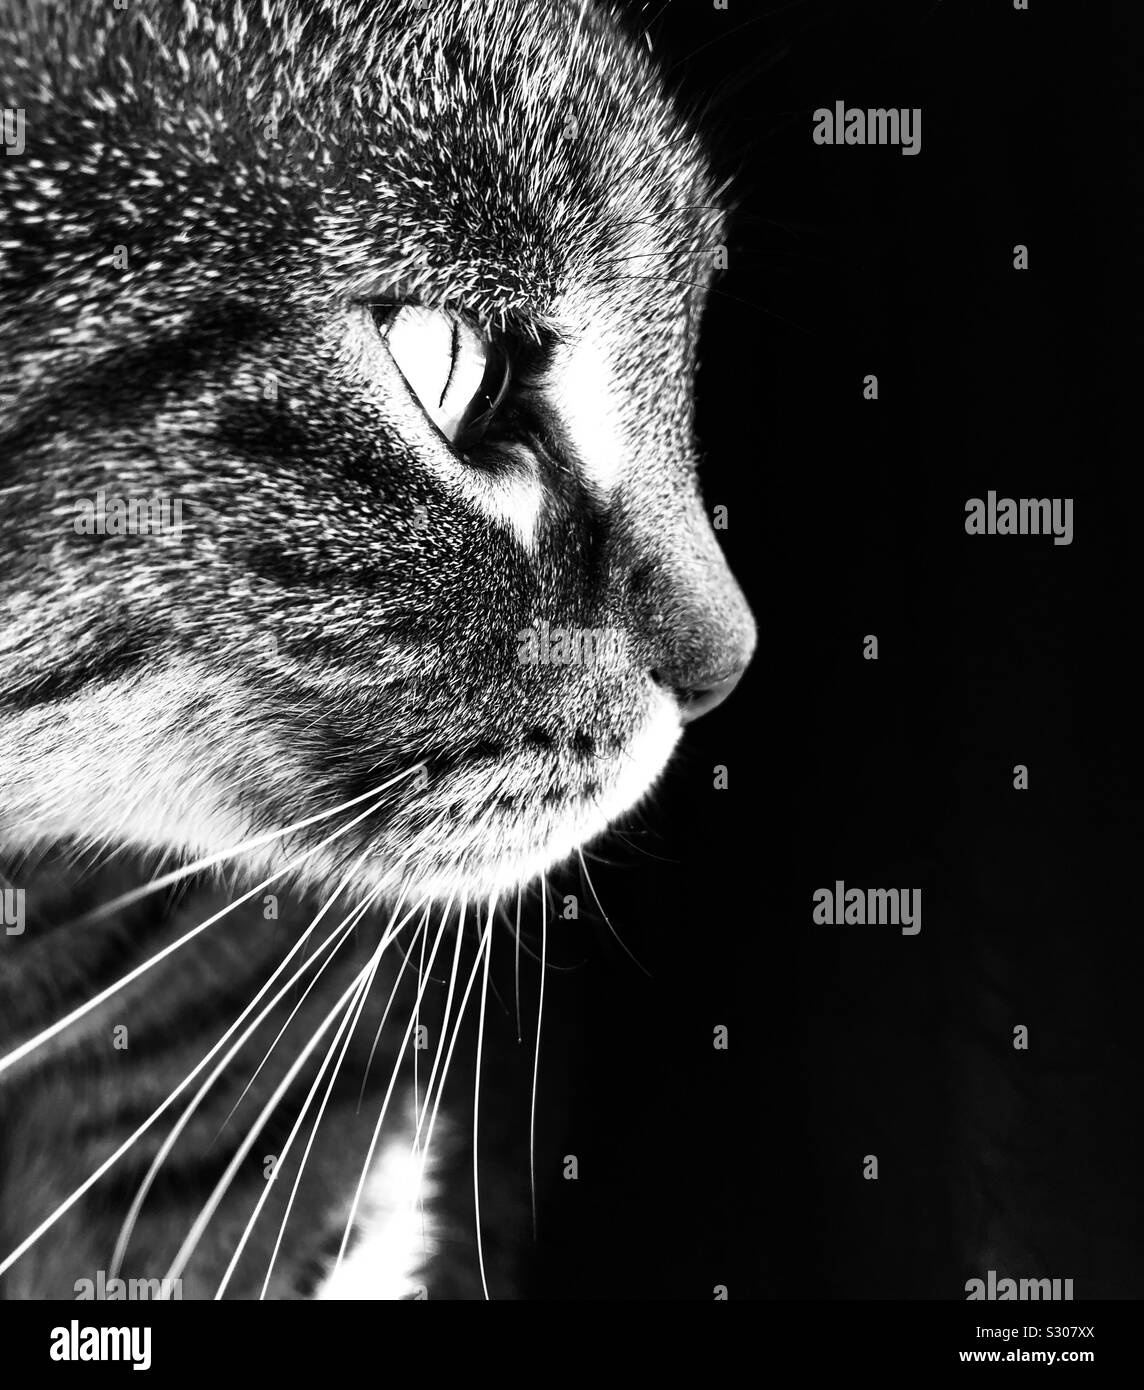 Dramatic black & white tabby cat portrait Stock Photo